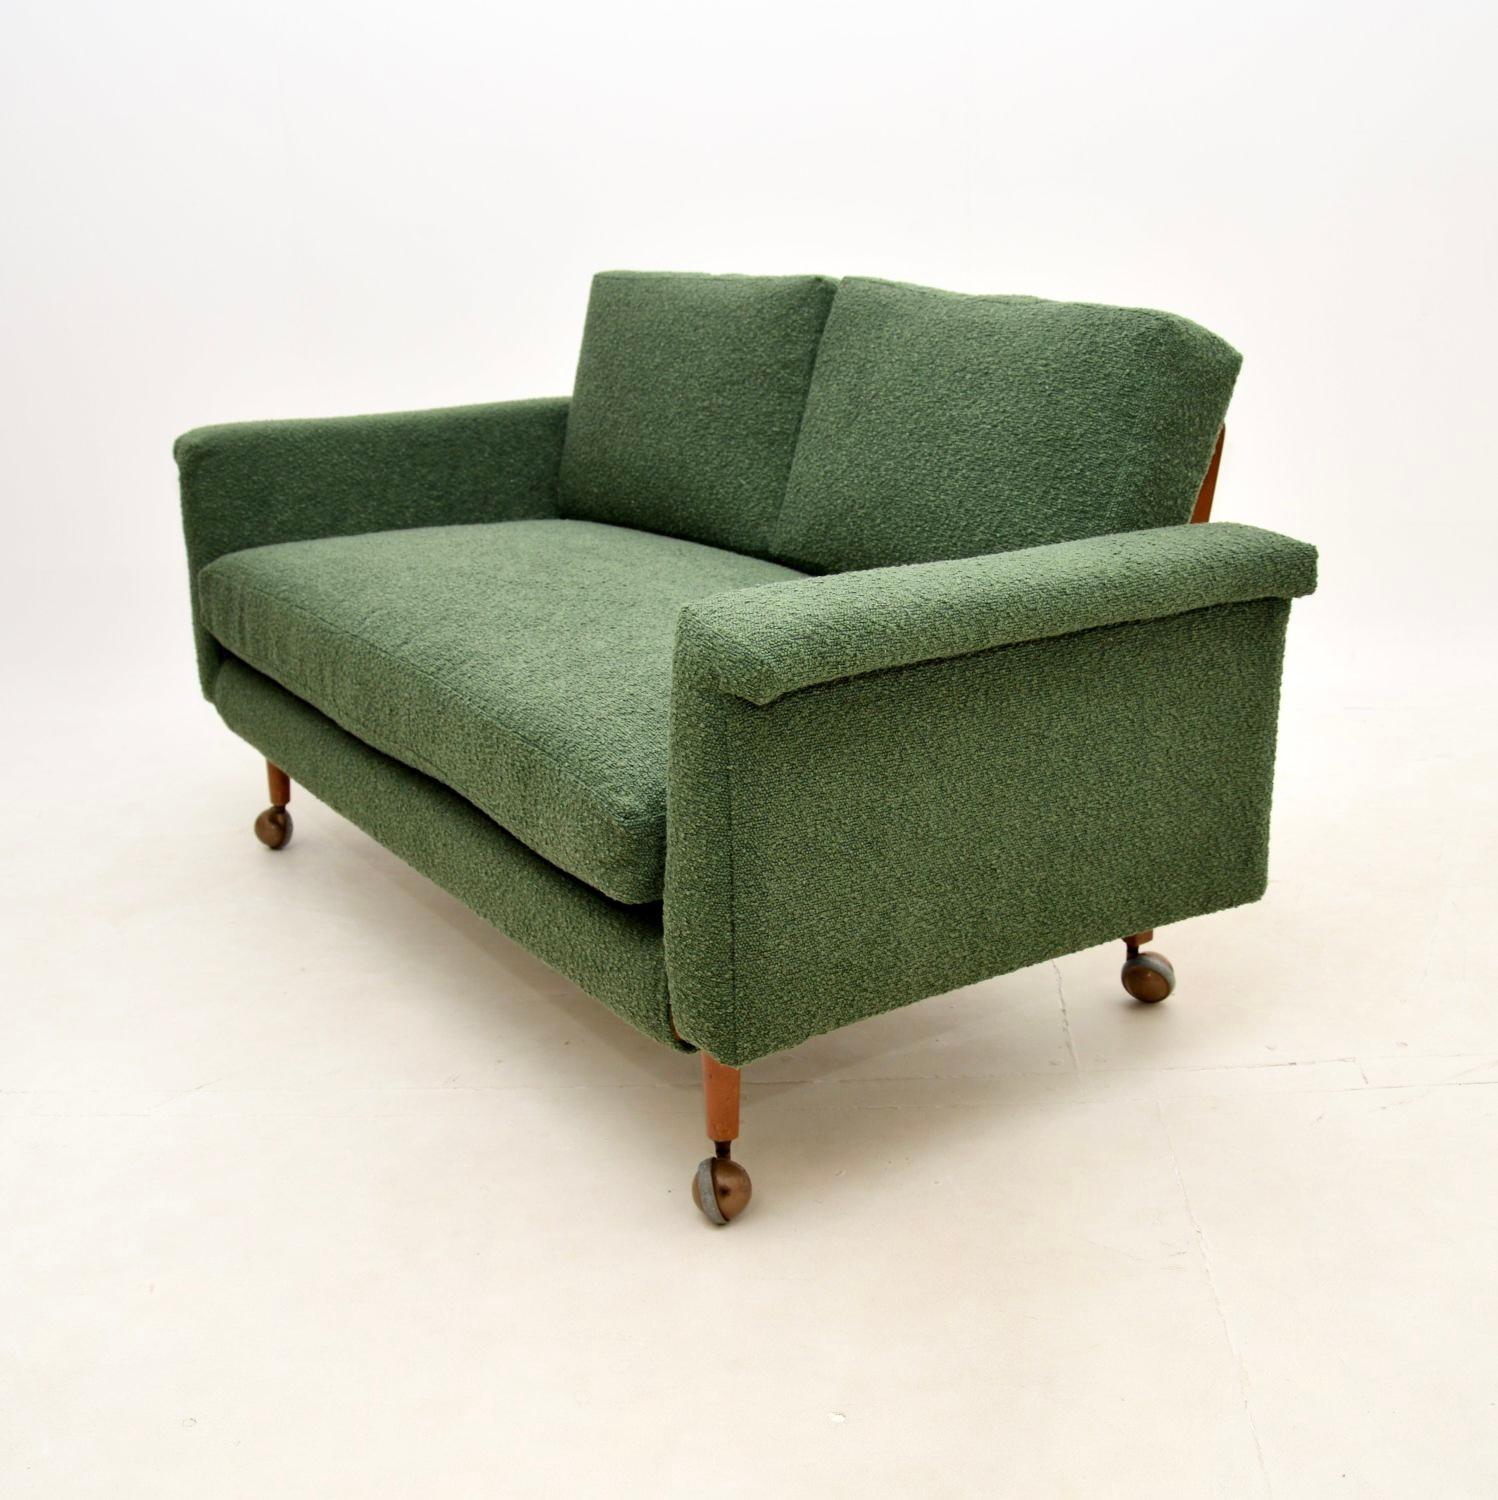 British 1950’s Vintage Sofa Bed